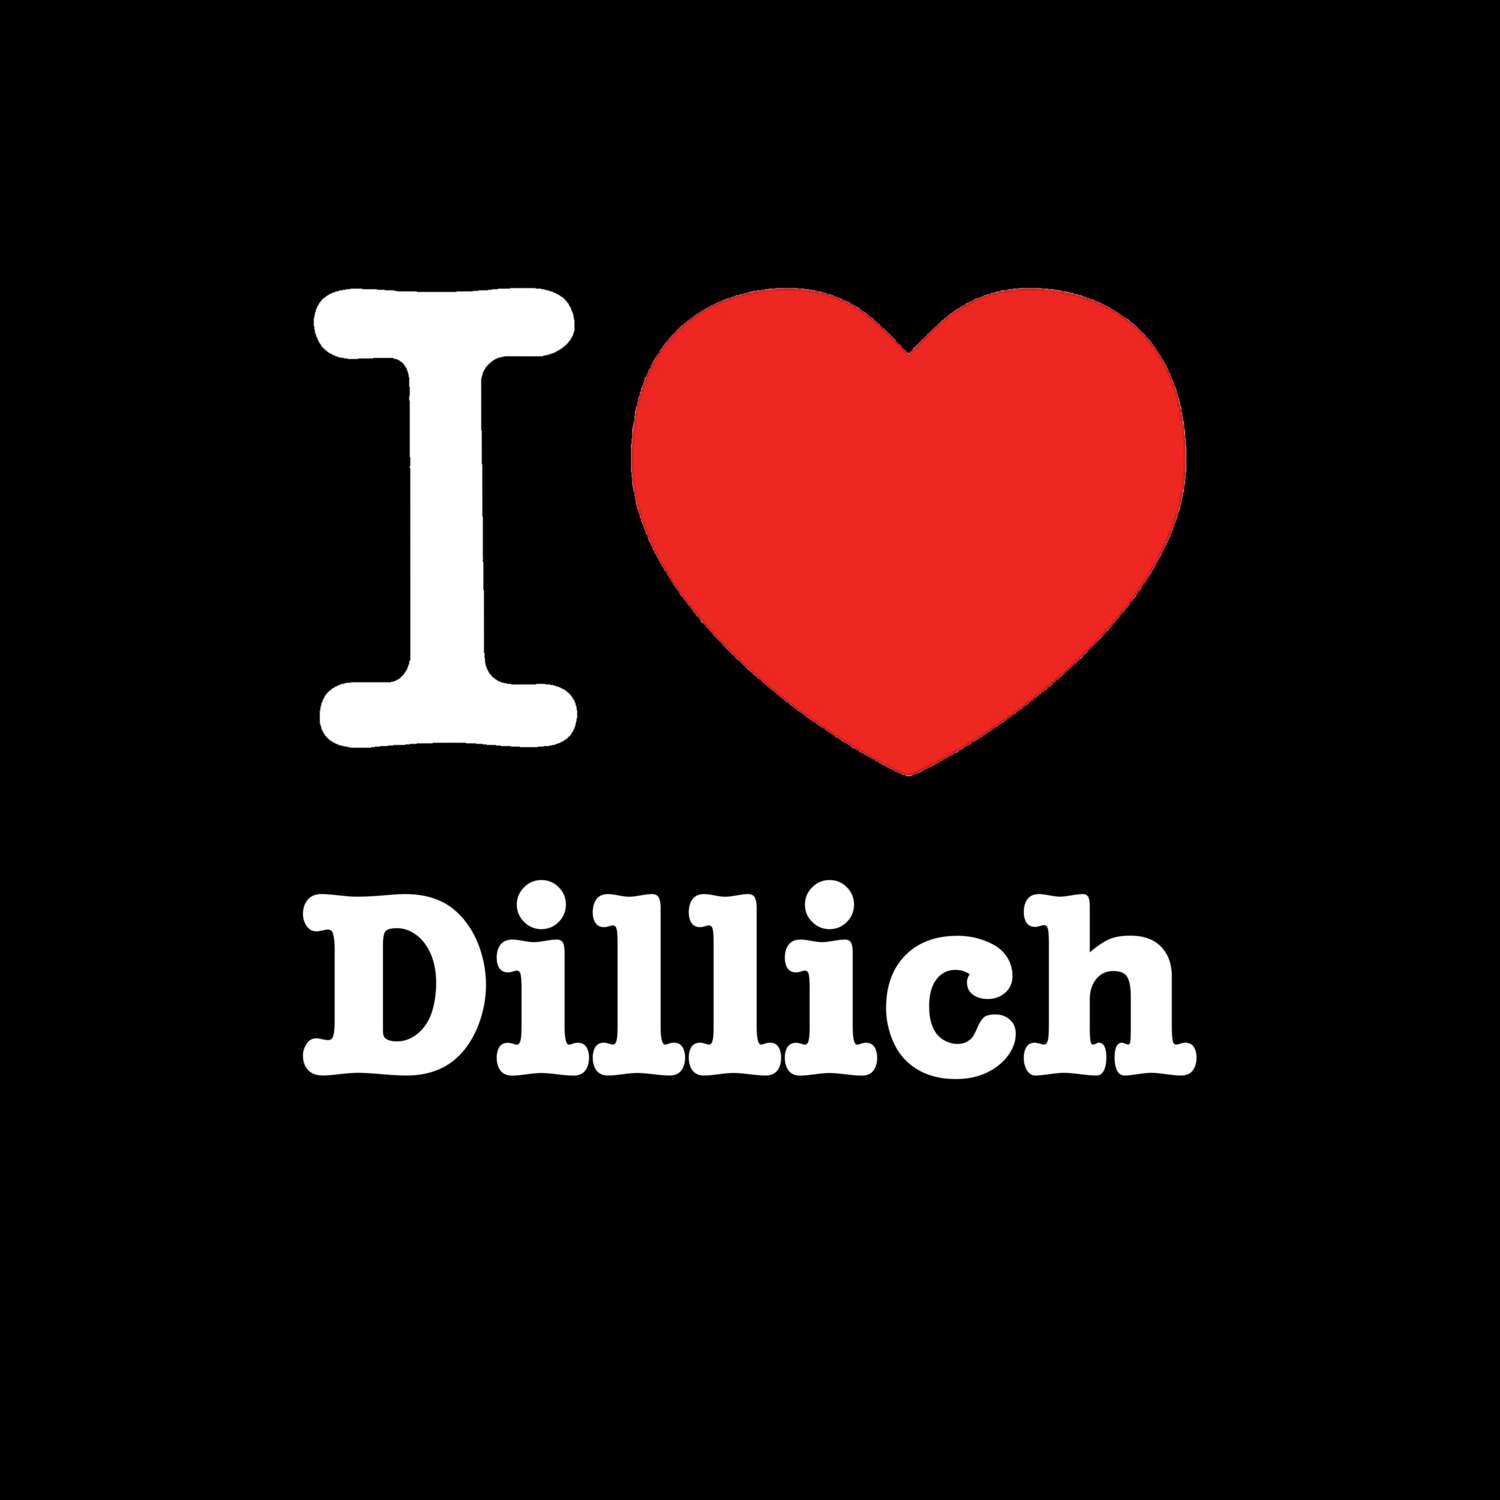 Dillich T-Shirt »I love«